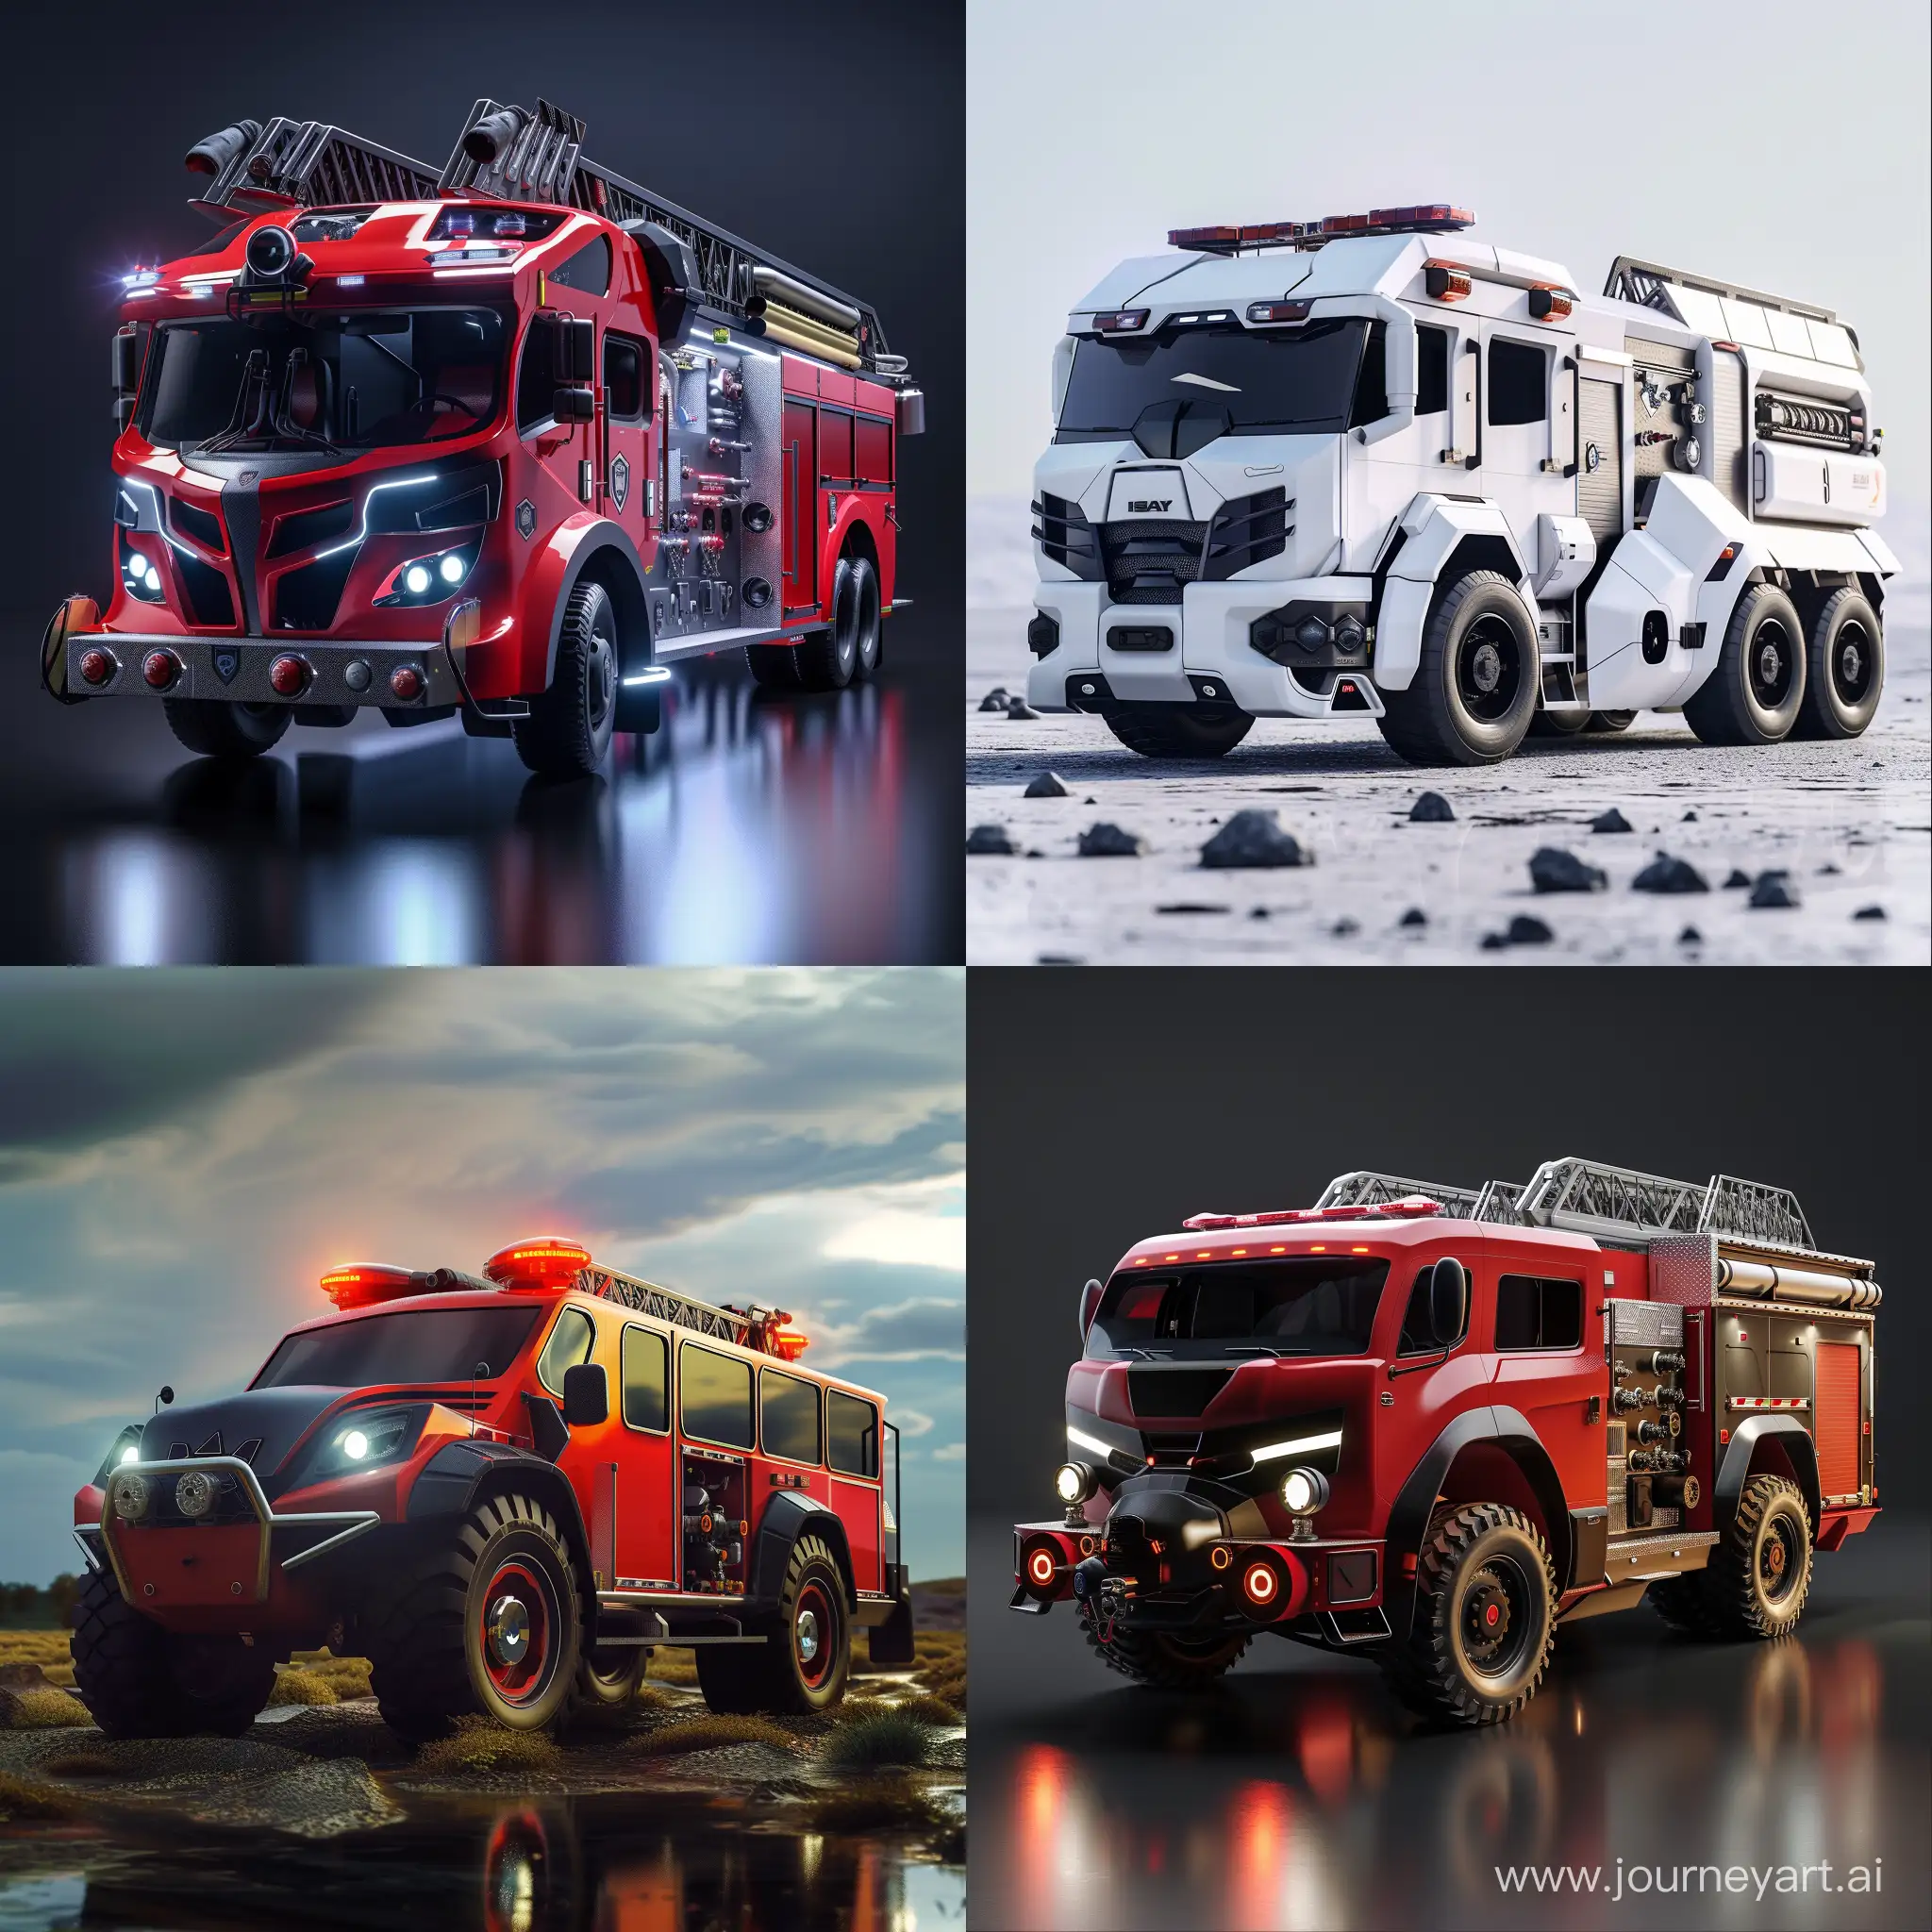 Futuristic fire truck, composite materials, octane render